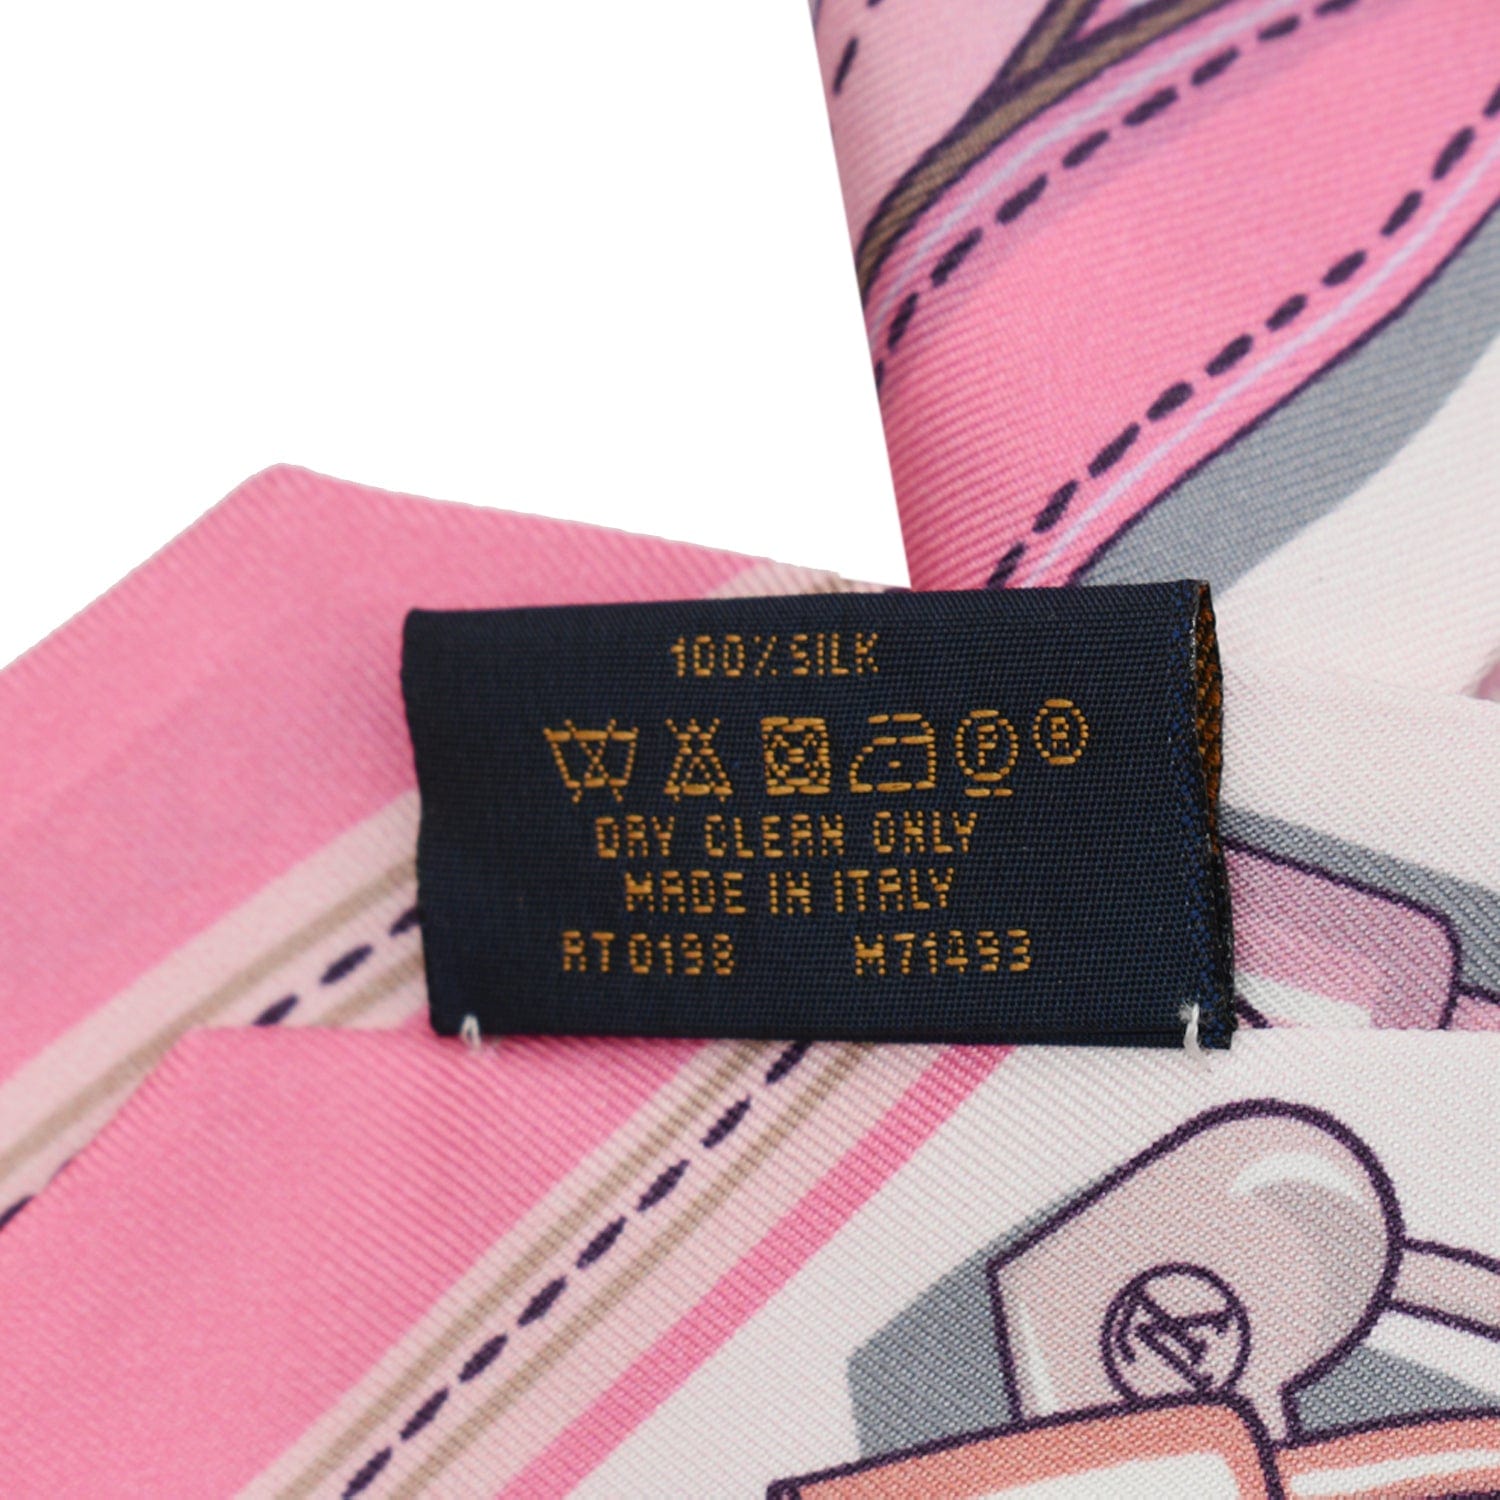 Louis Vuitton Denimgram Confidential Bandeau Light Pink Silk